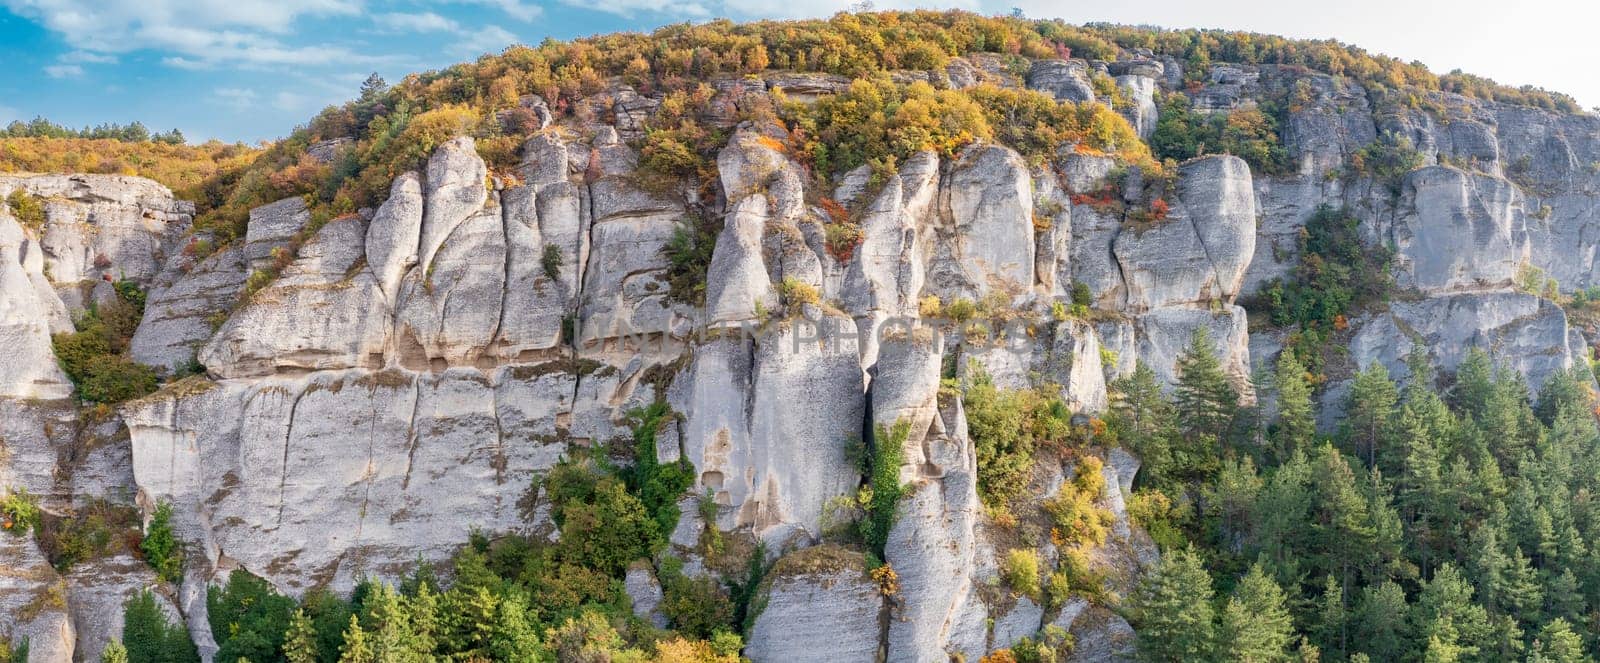 The cliffs Madara in Bulgaria. UNESCO World Heritage Site.